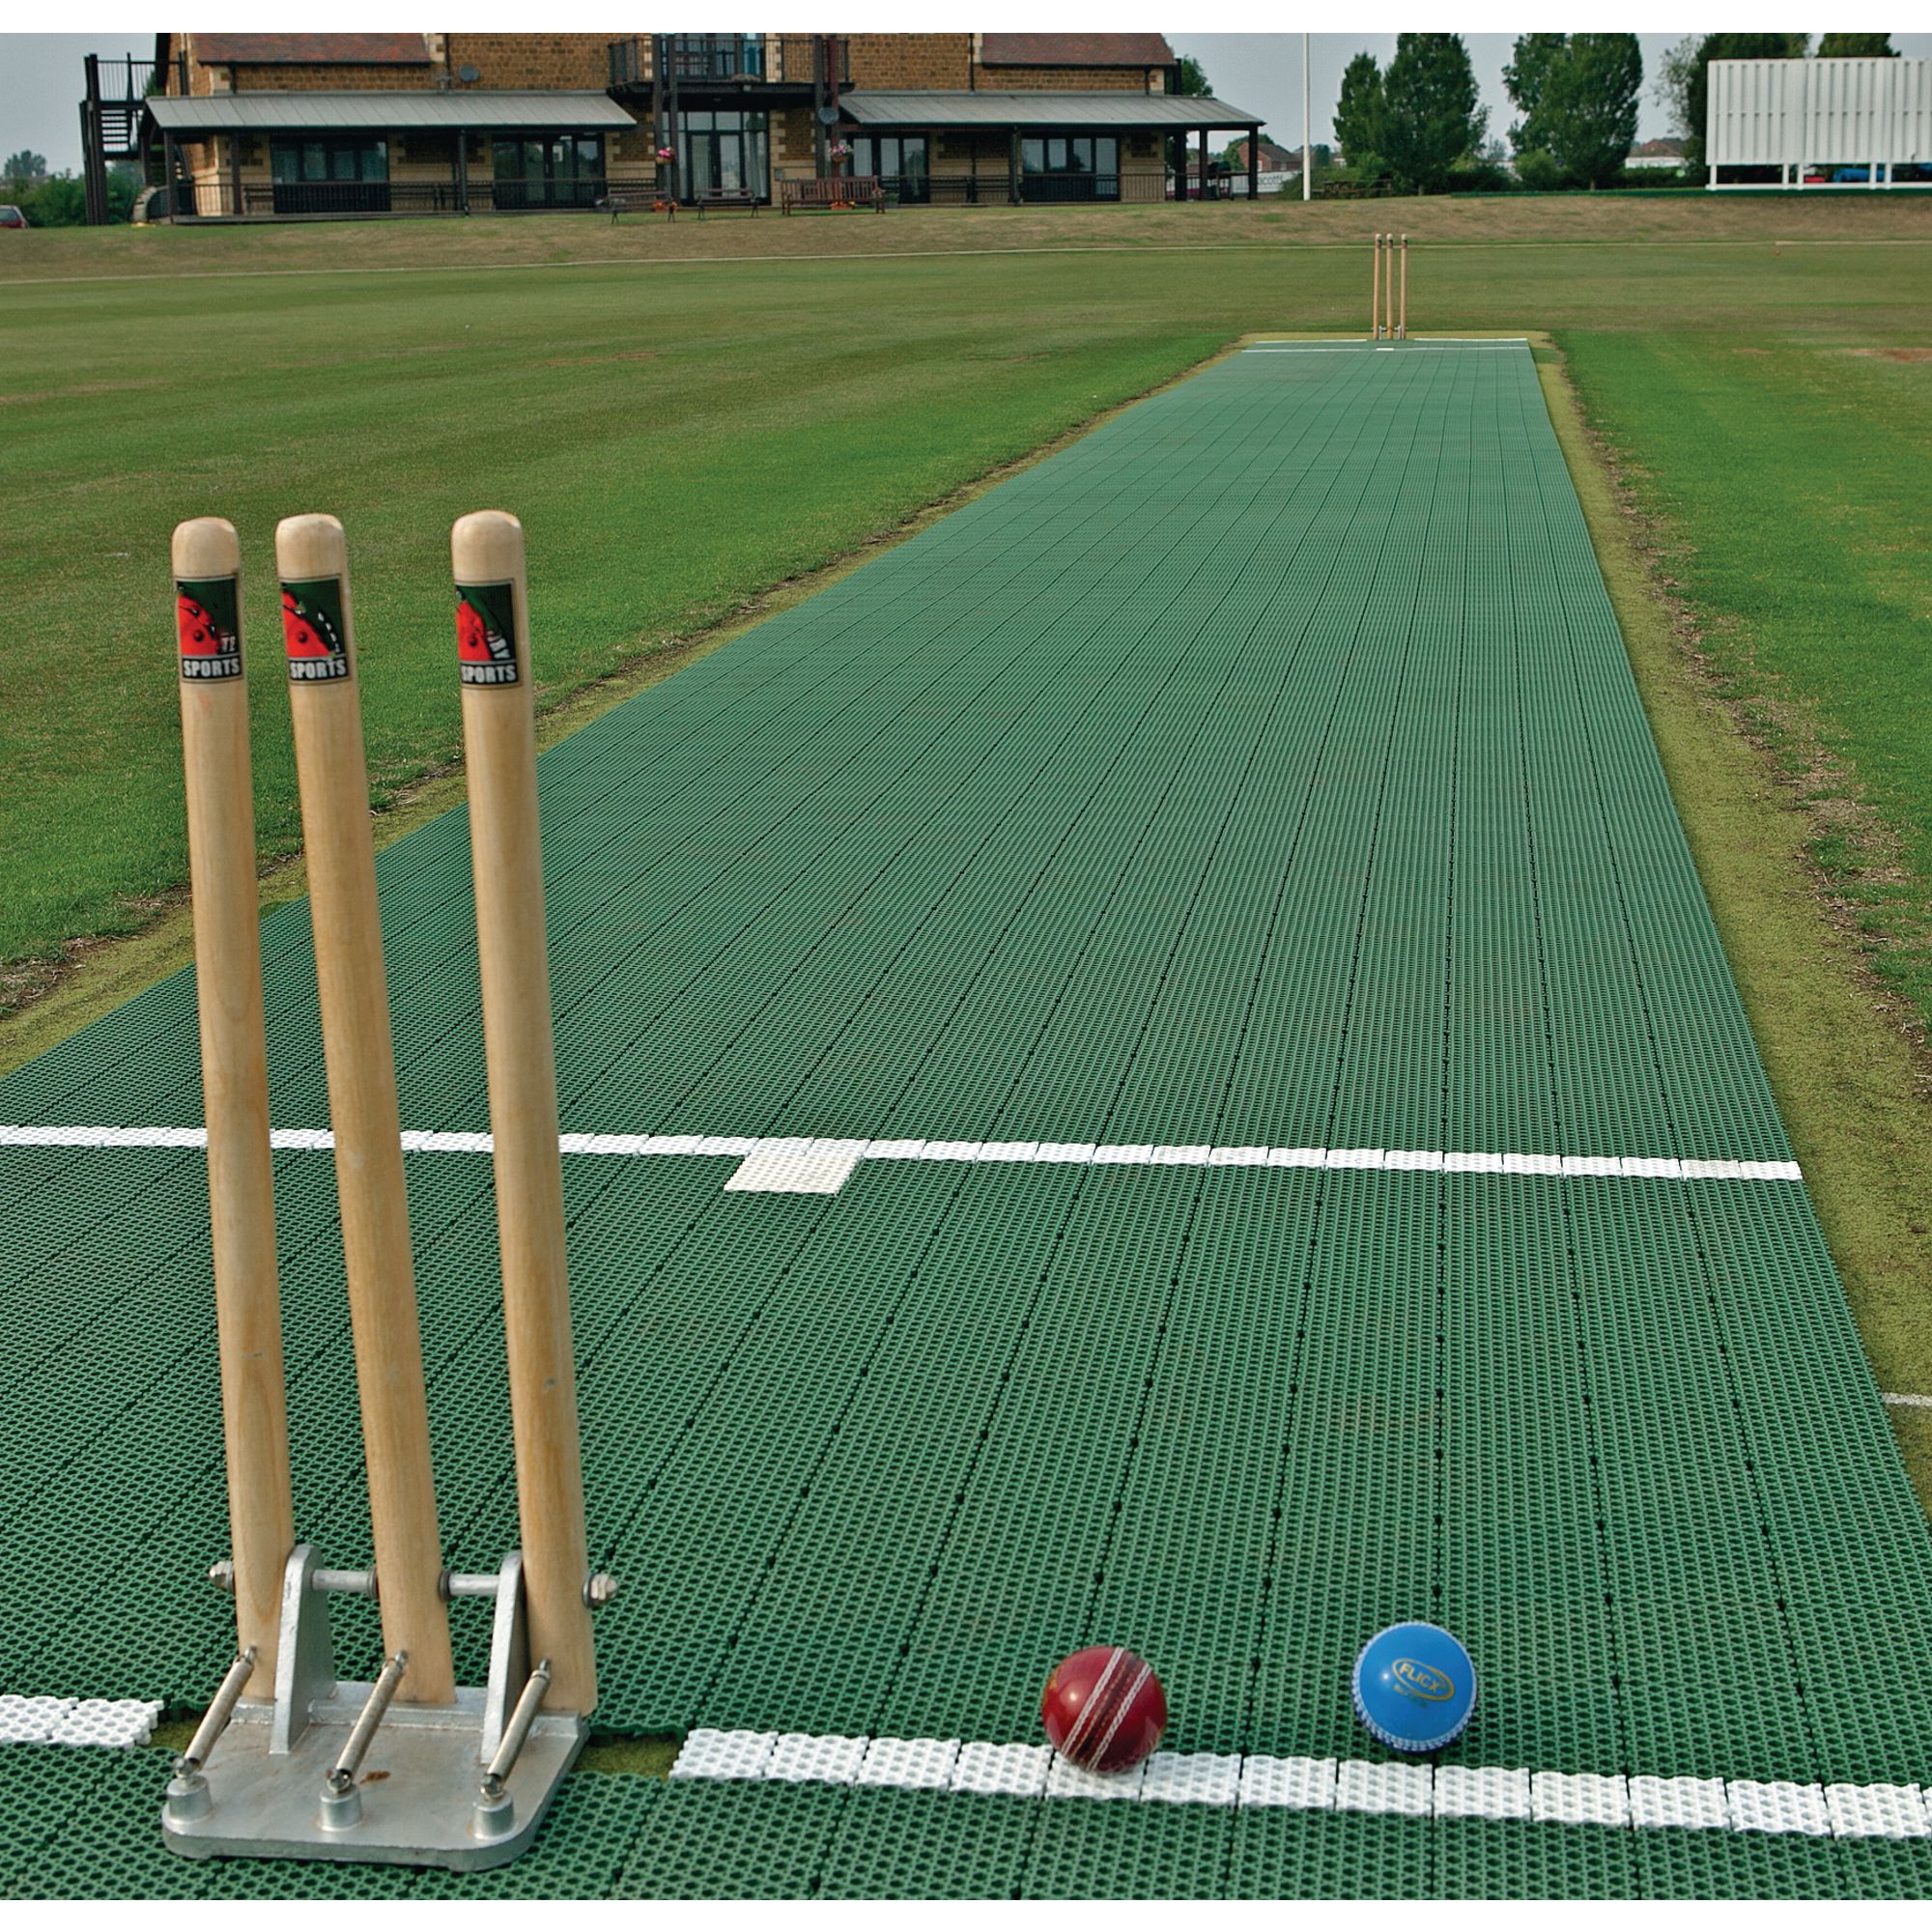 Flicx Cricket Match Pitch 22.12x1.8m